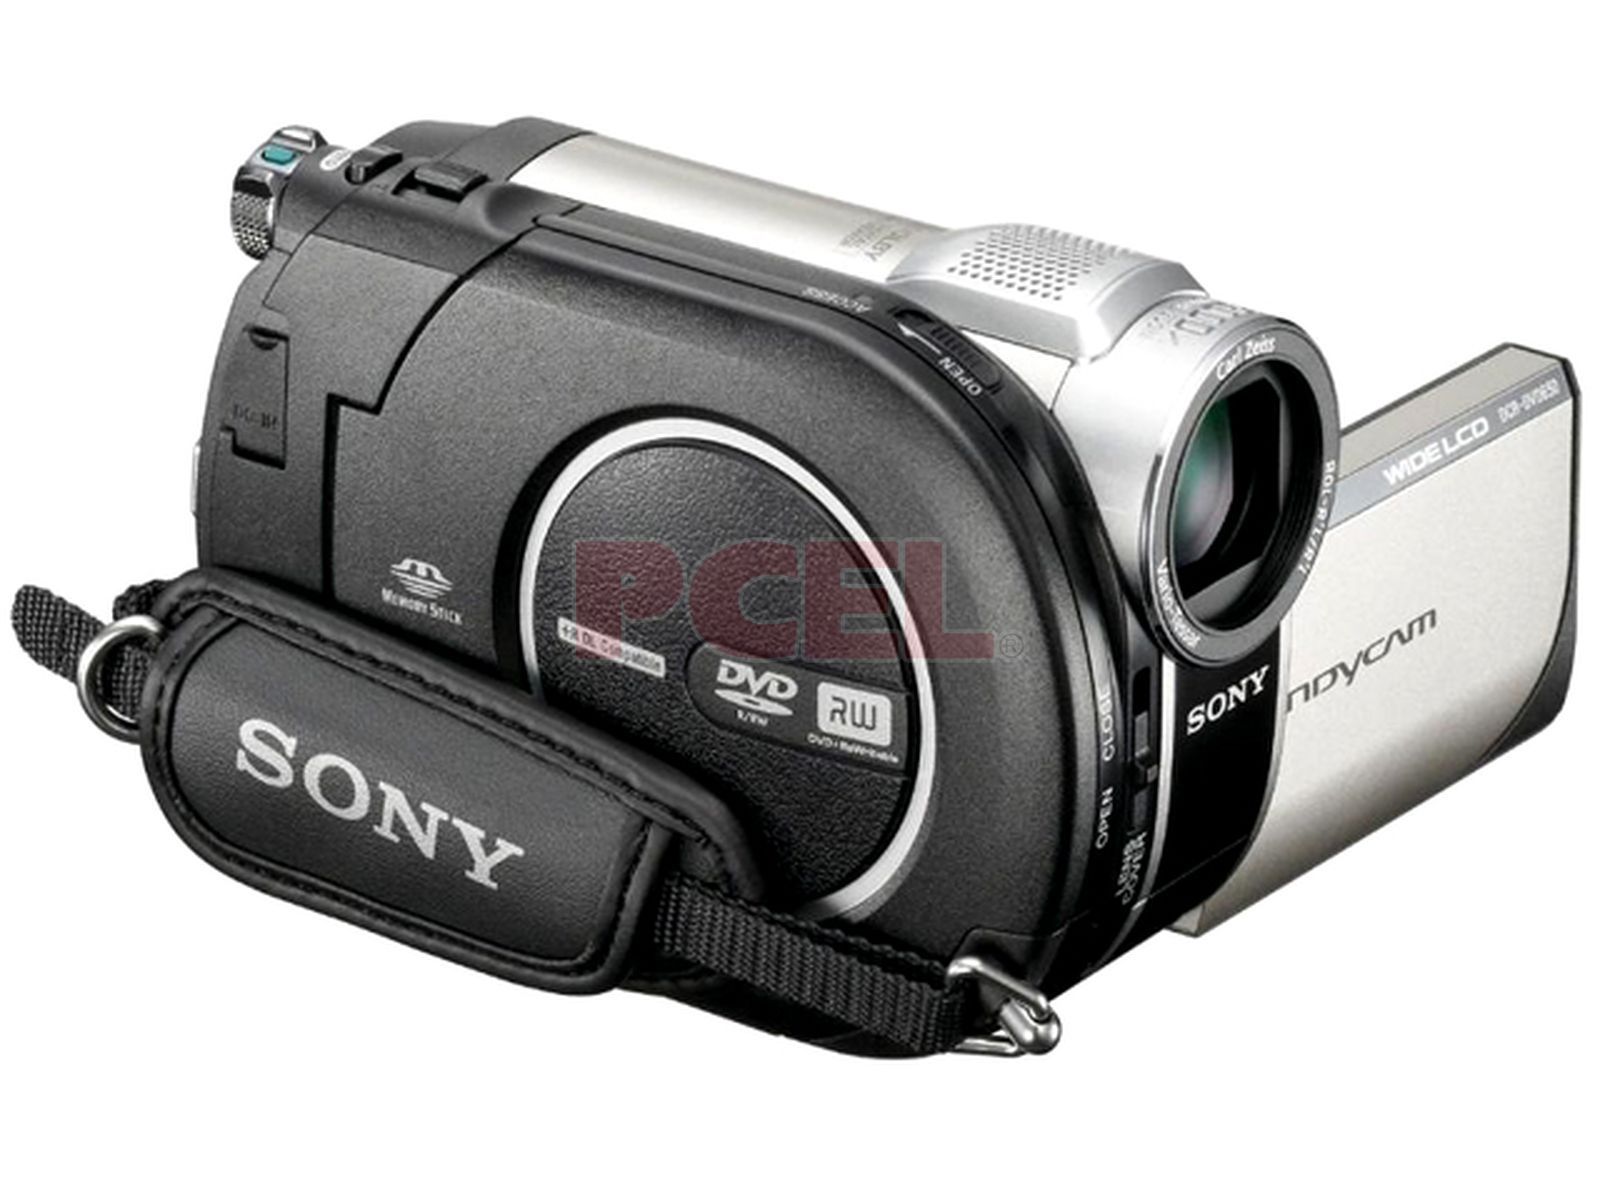 Sony 650. Видеокамера Sony DCR-dvd710e. Sony Hybrid DCR dvd610. Sony Handycam DCR-dvd610. Sony Handycam DCR-dvd710e.